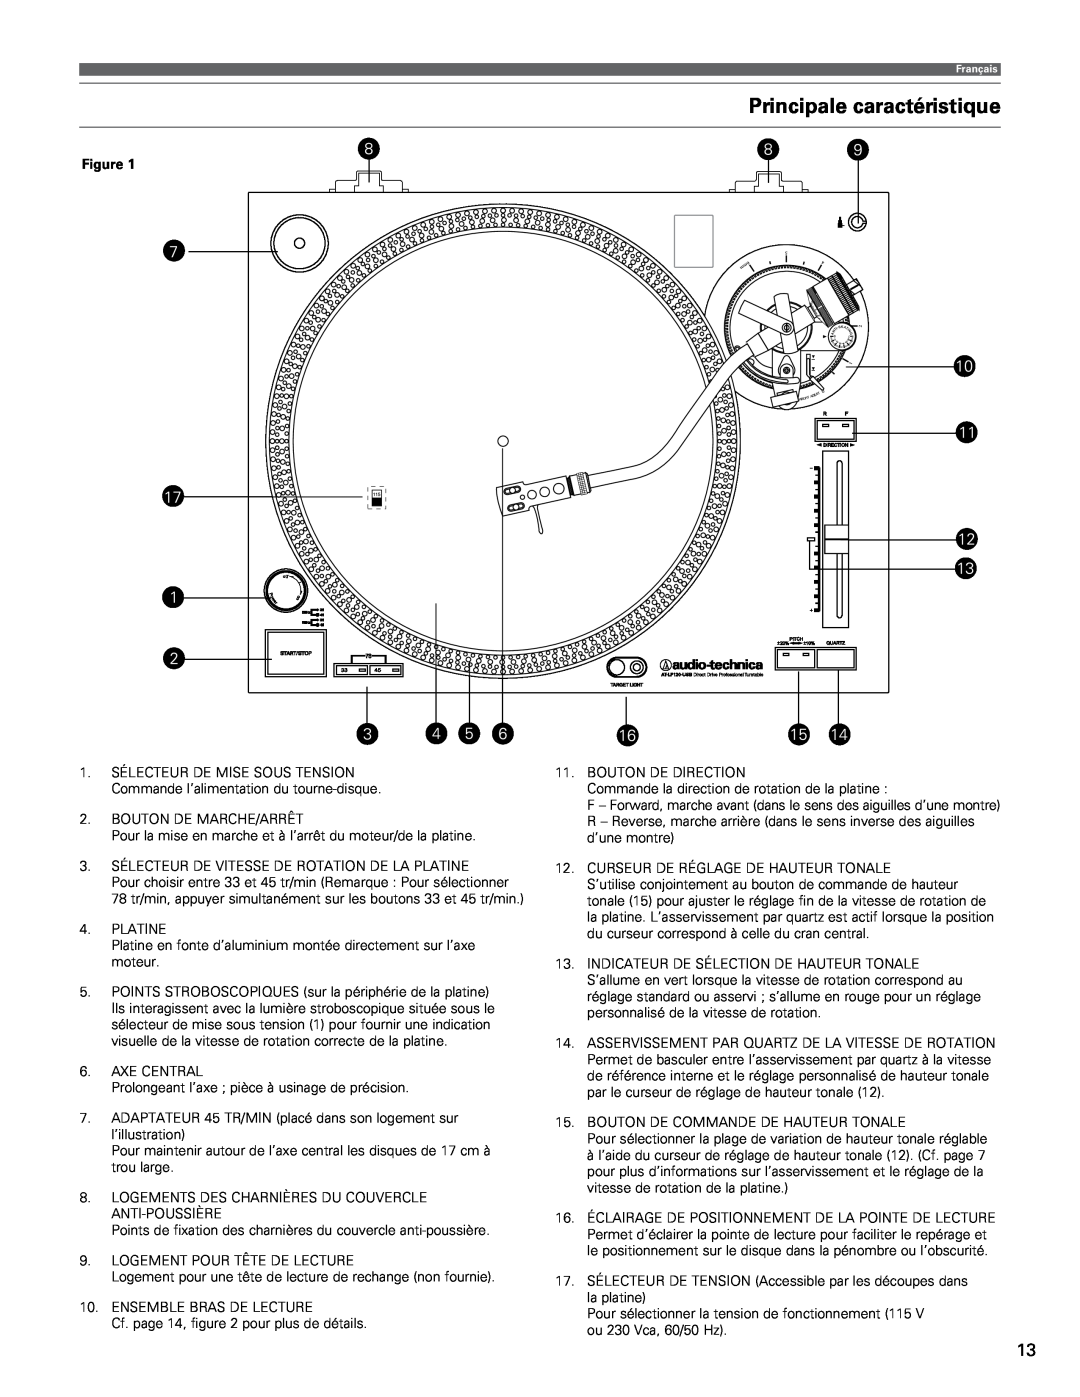 Audio-Technica AT-LP120-USB manual Principale caractéristique 